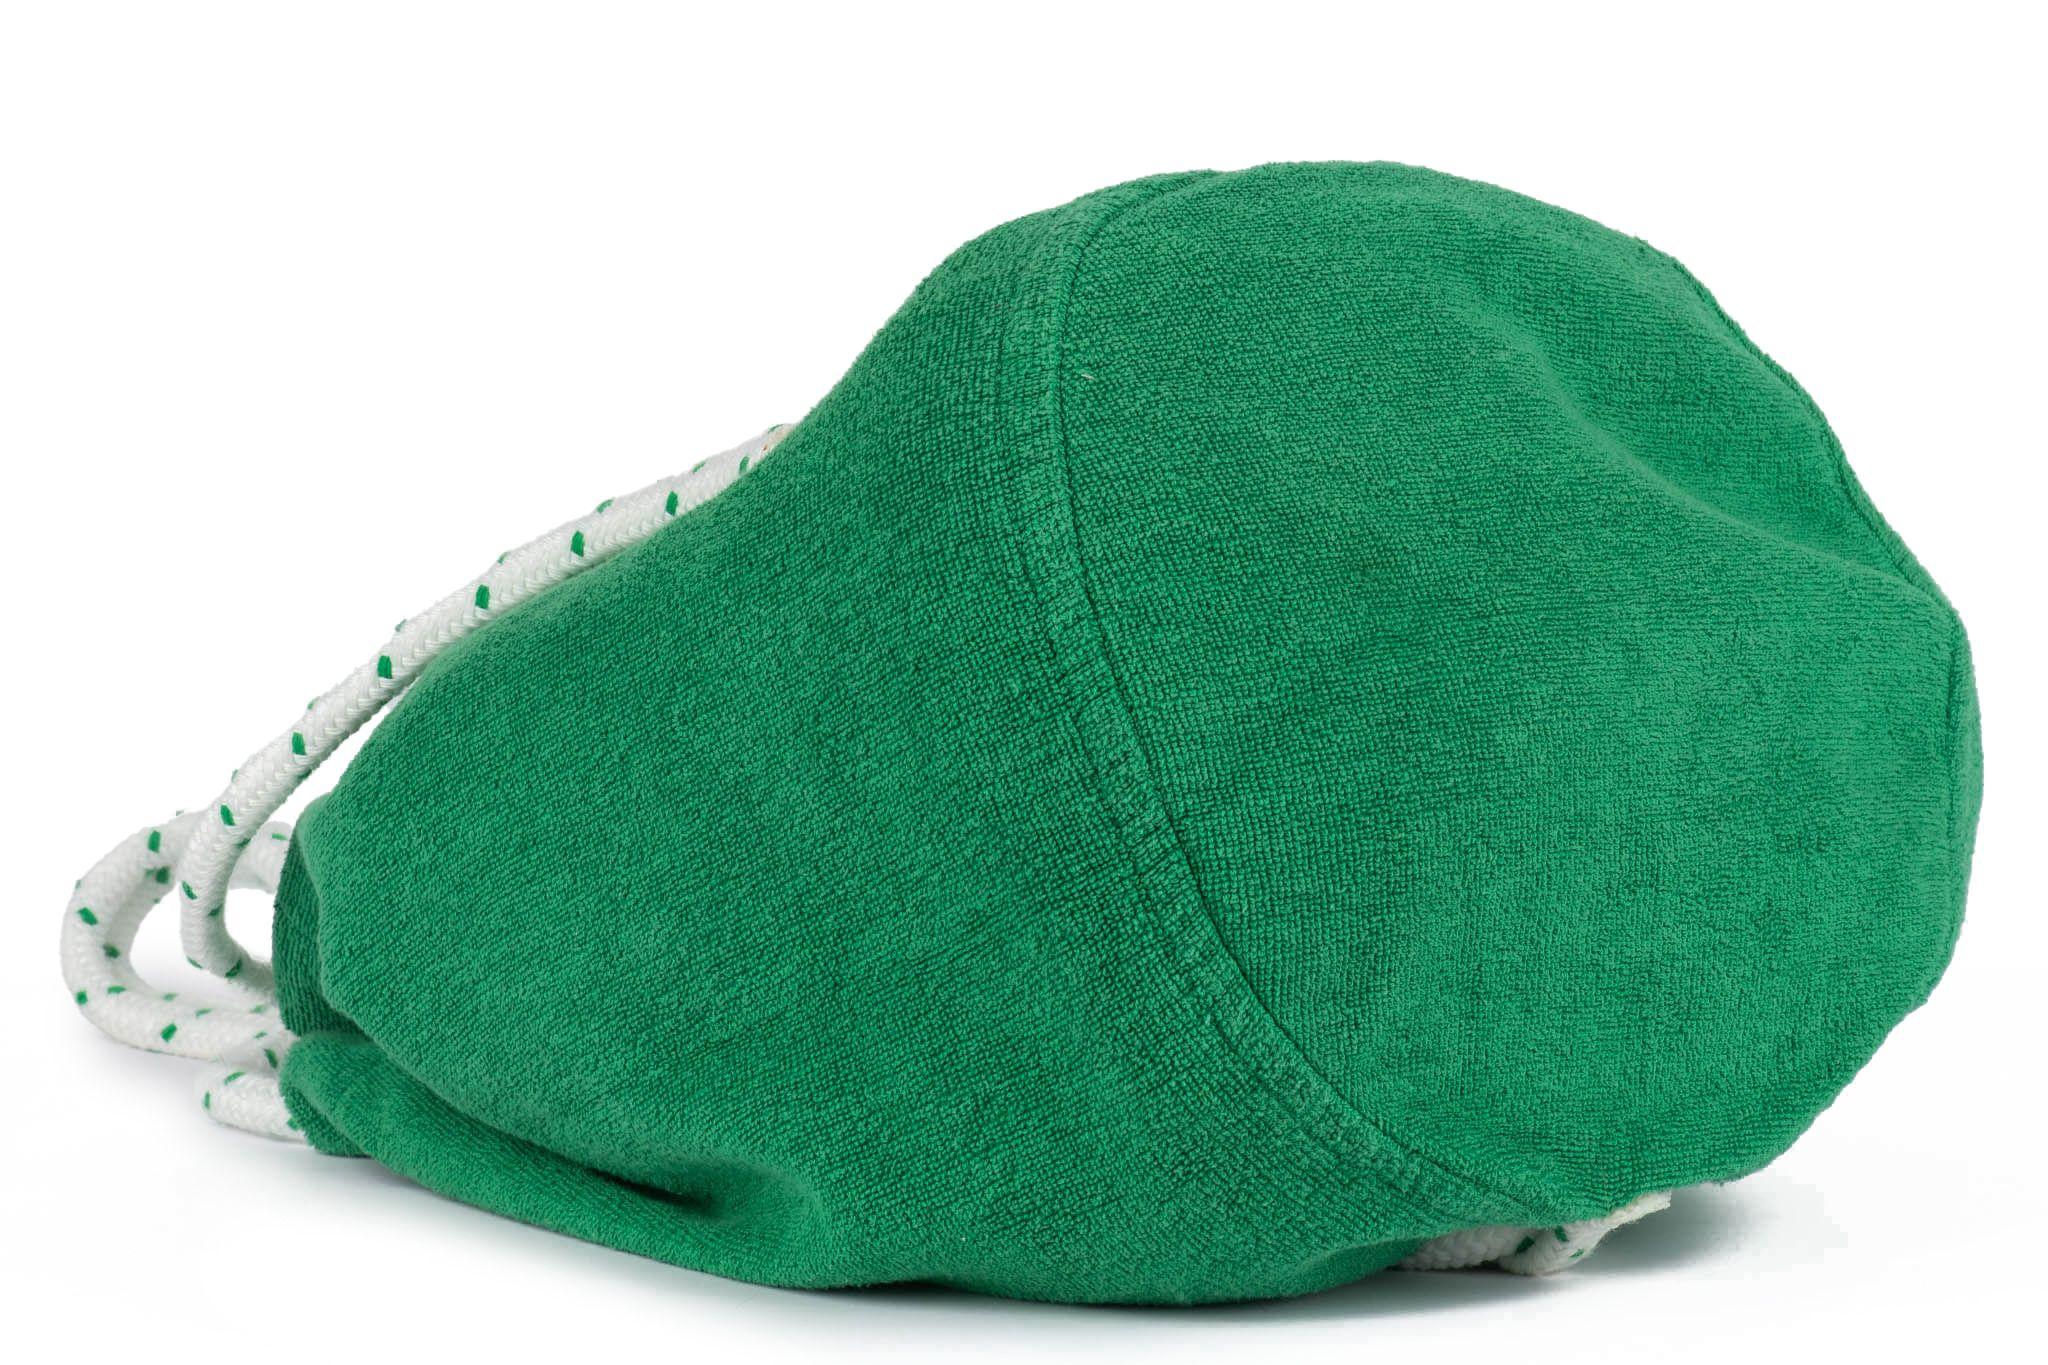 Hermès Green Golf Terry Cloth Beach Bag 2